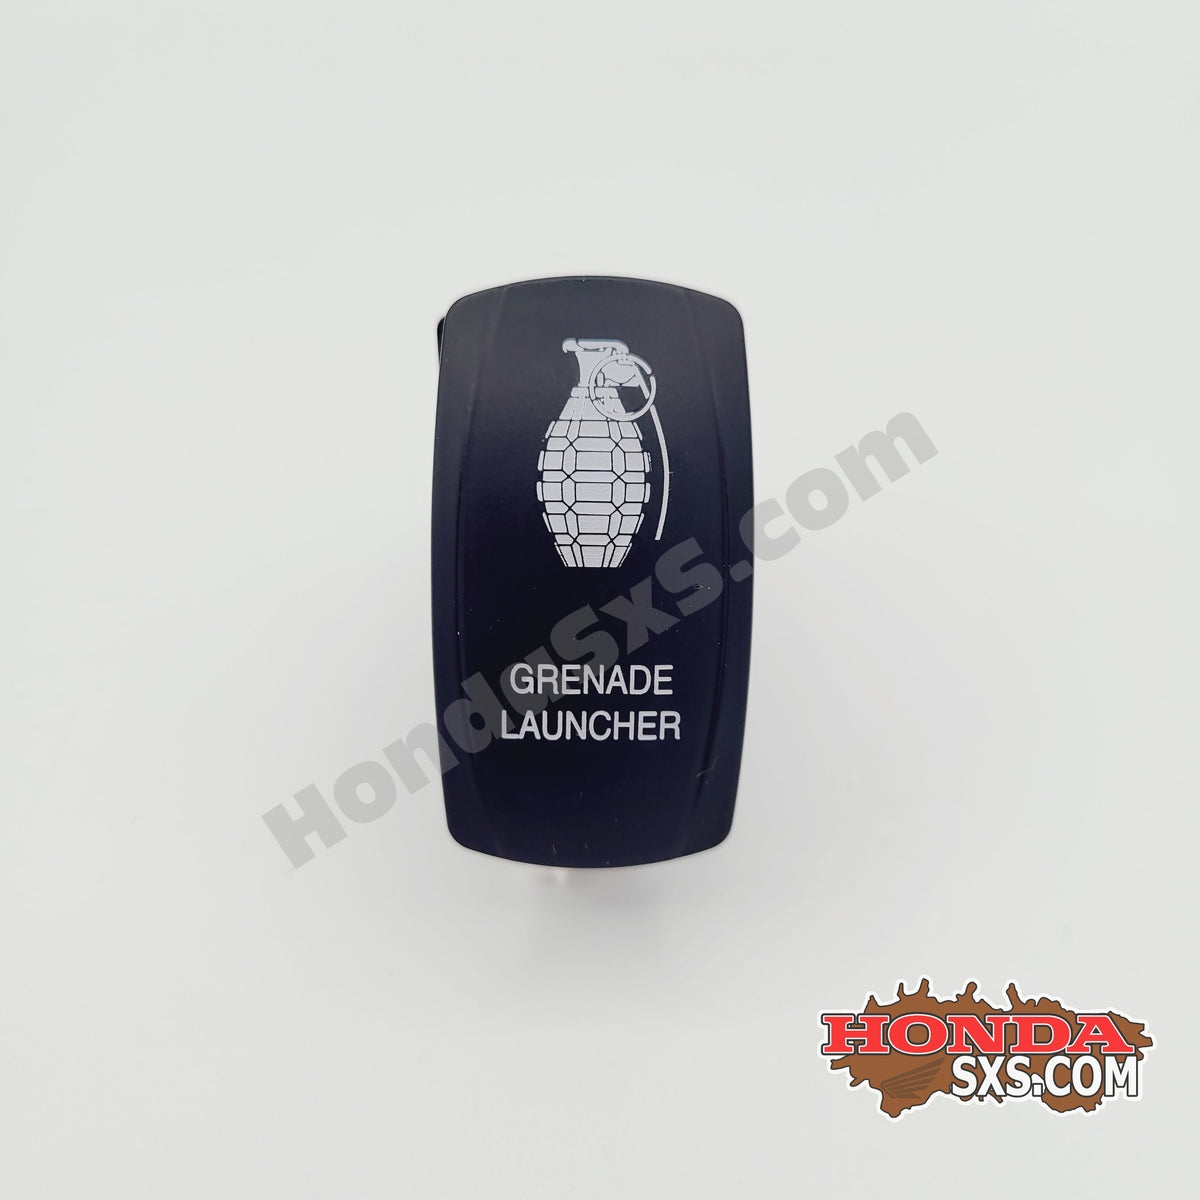 Grenade Launcher Rocker Switch - SPST - ON/OFF switch